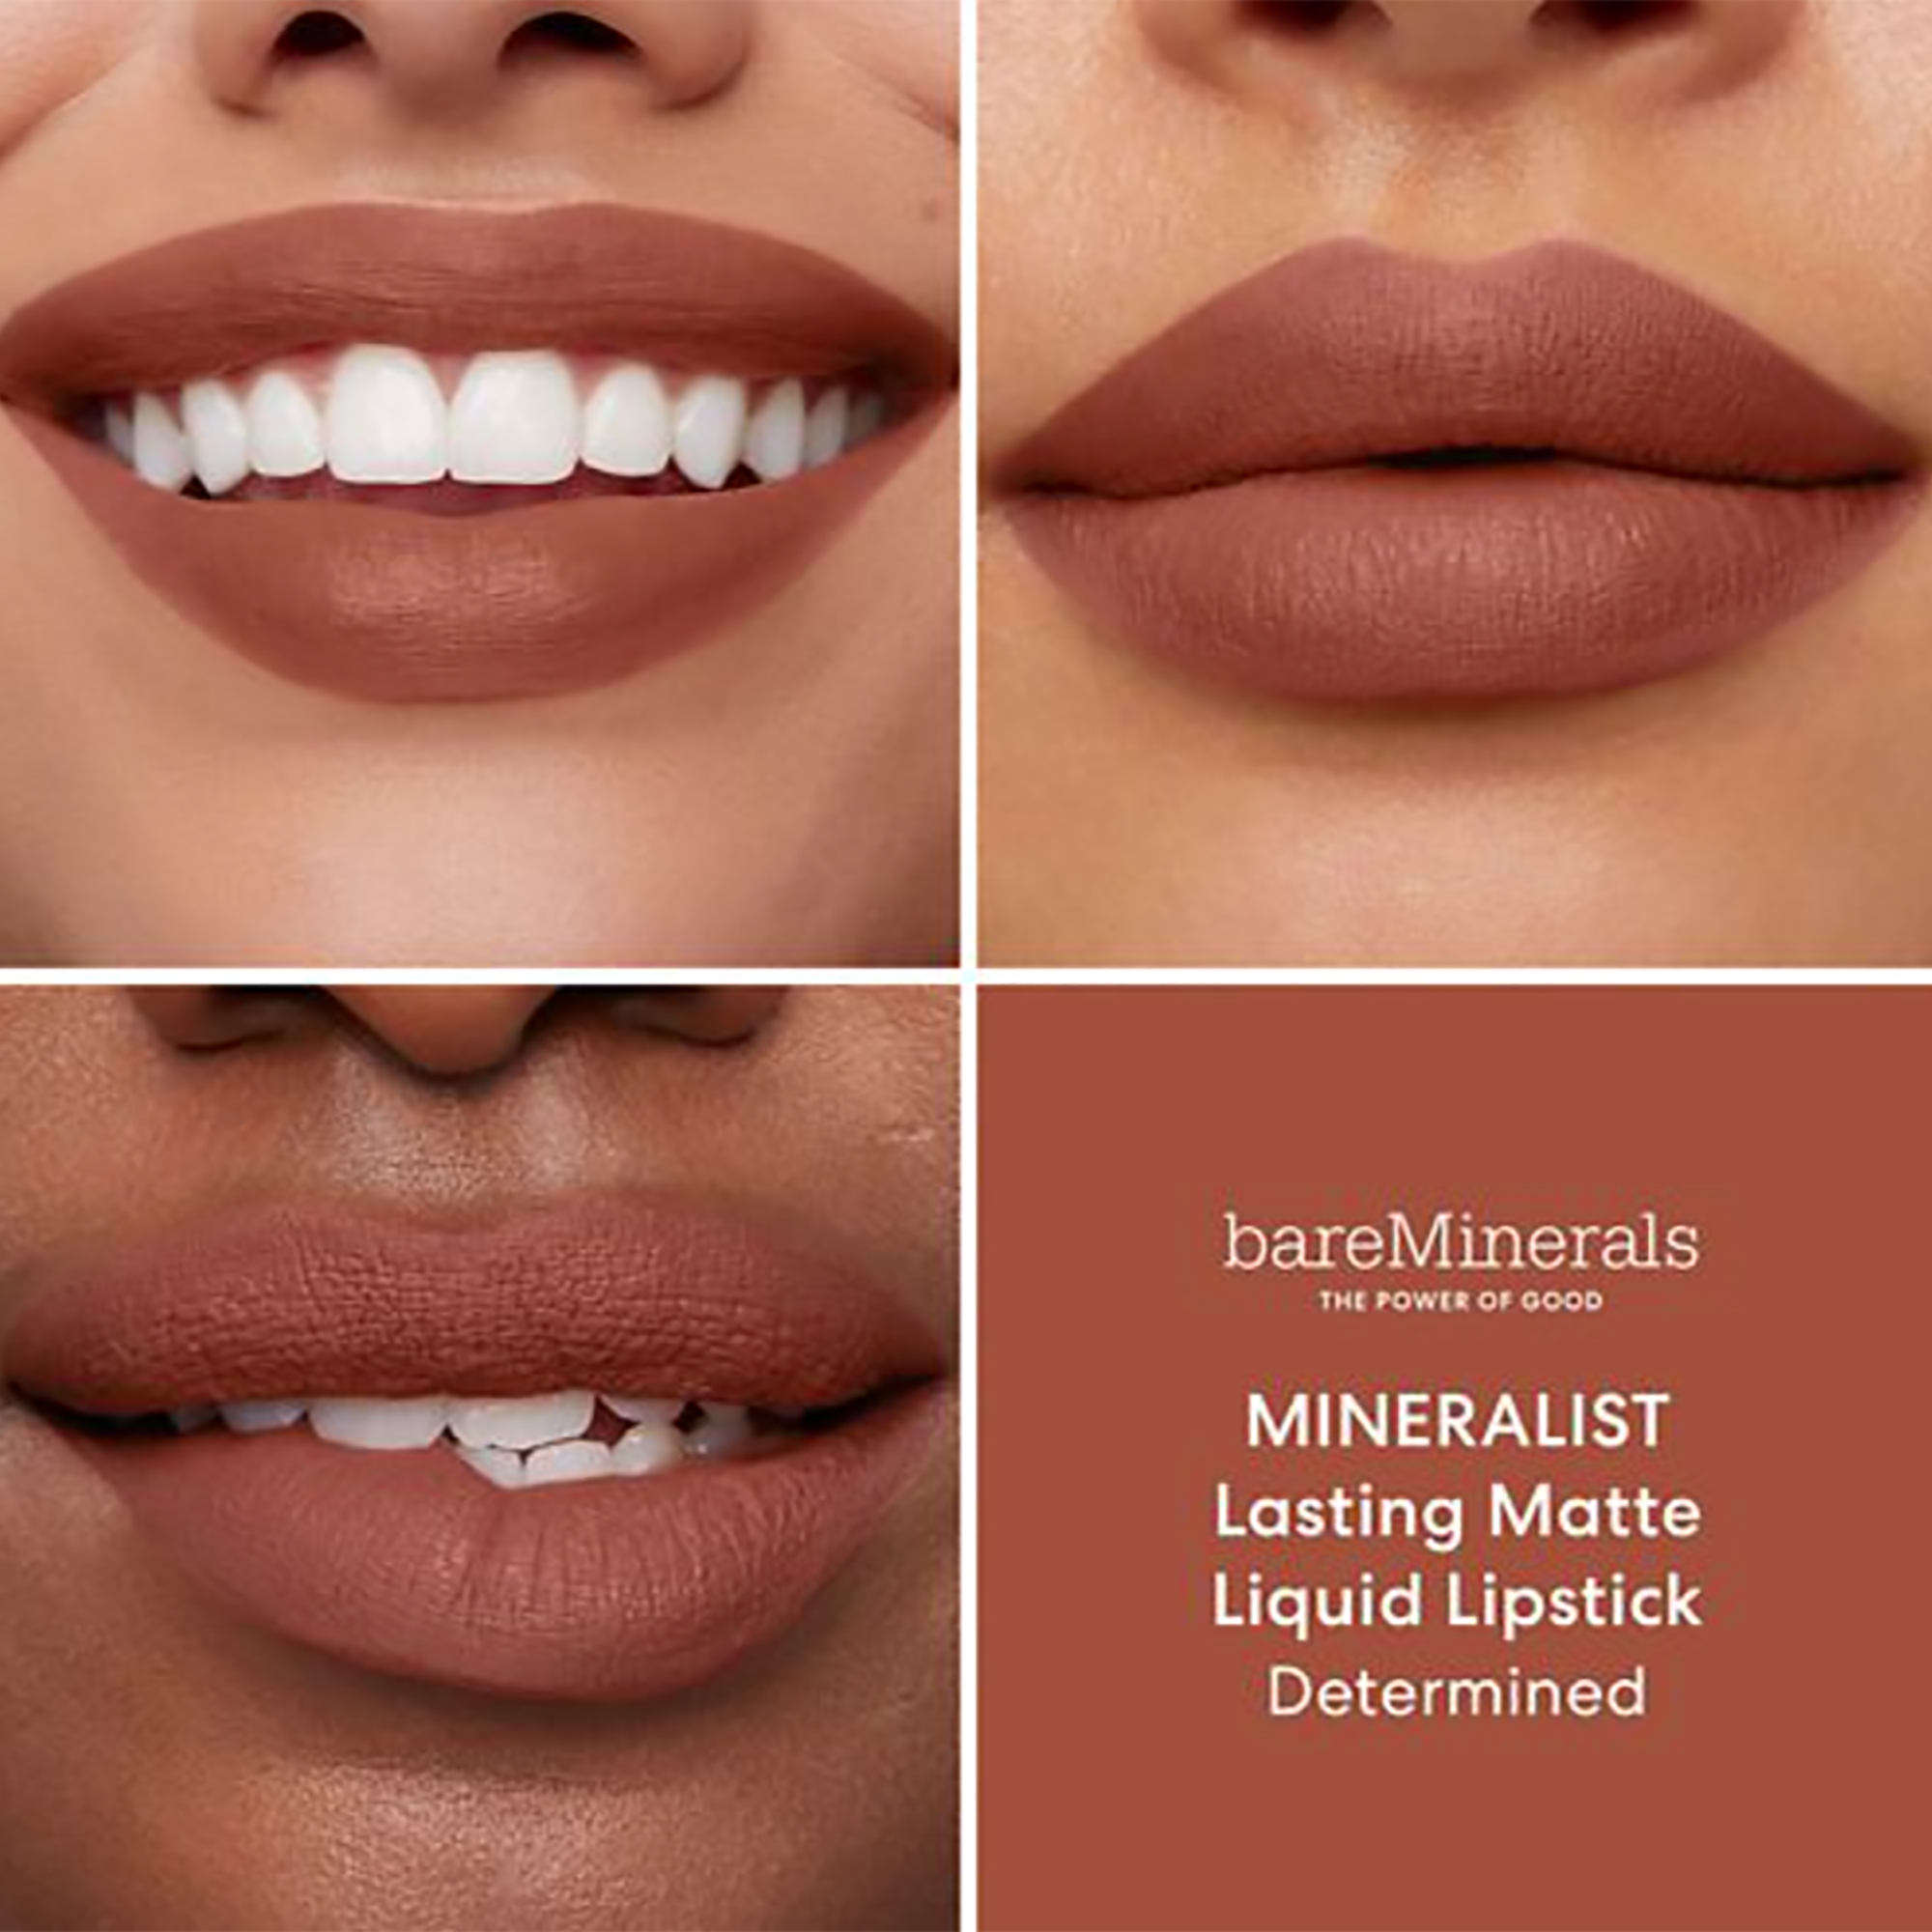 Bare Minerals Mineralist Lasting Matte Liquid Lipstick / DETERMINED